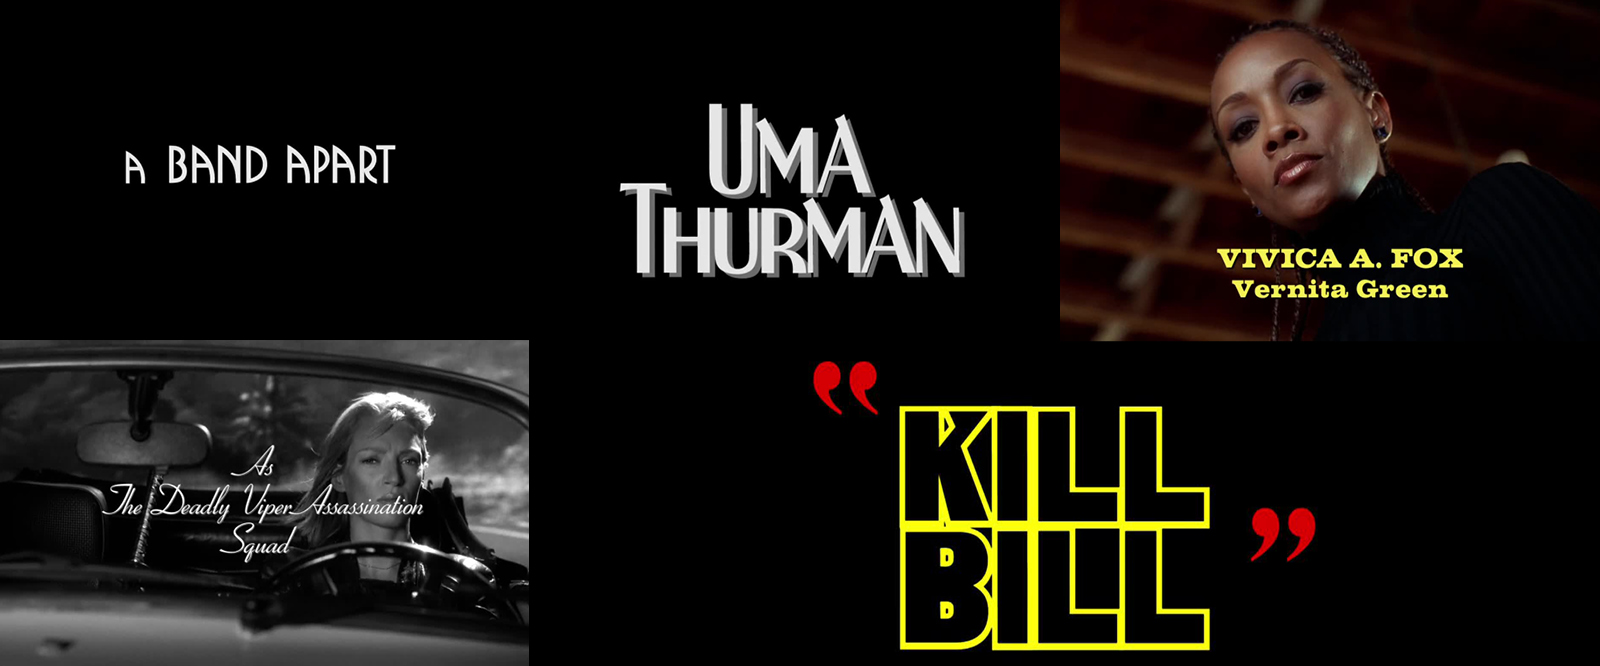 Song Credits Kill Bill Vol 2 Prestamos Vehiculos De Carga